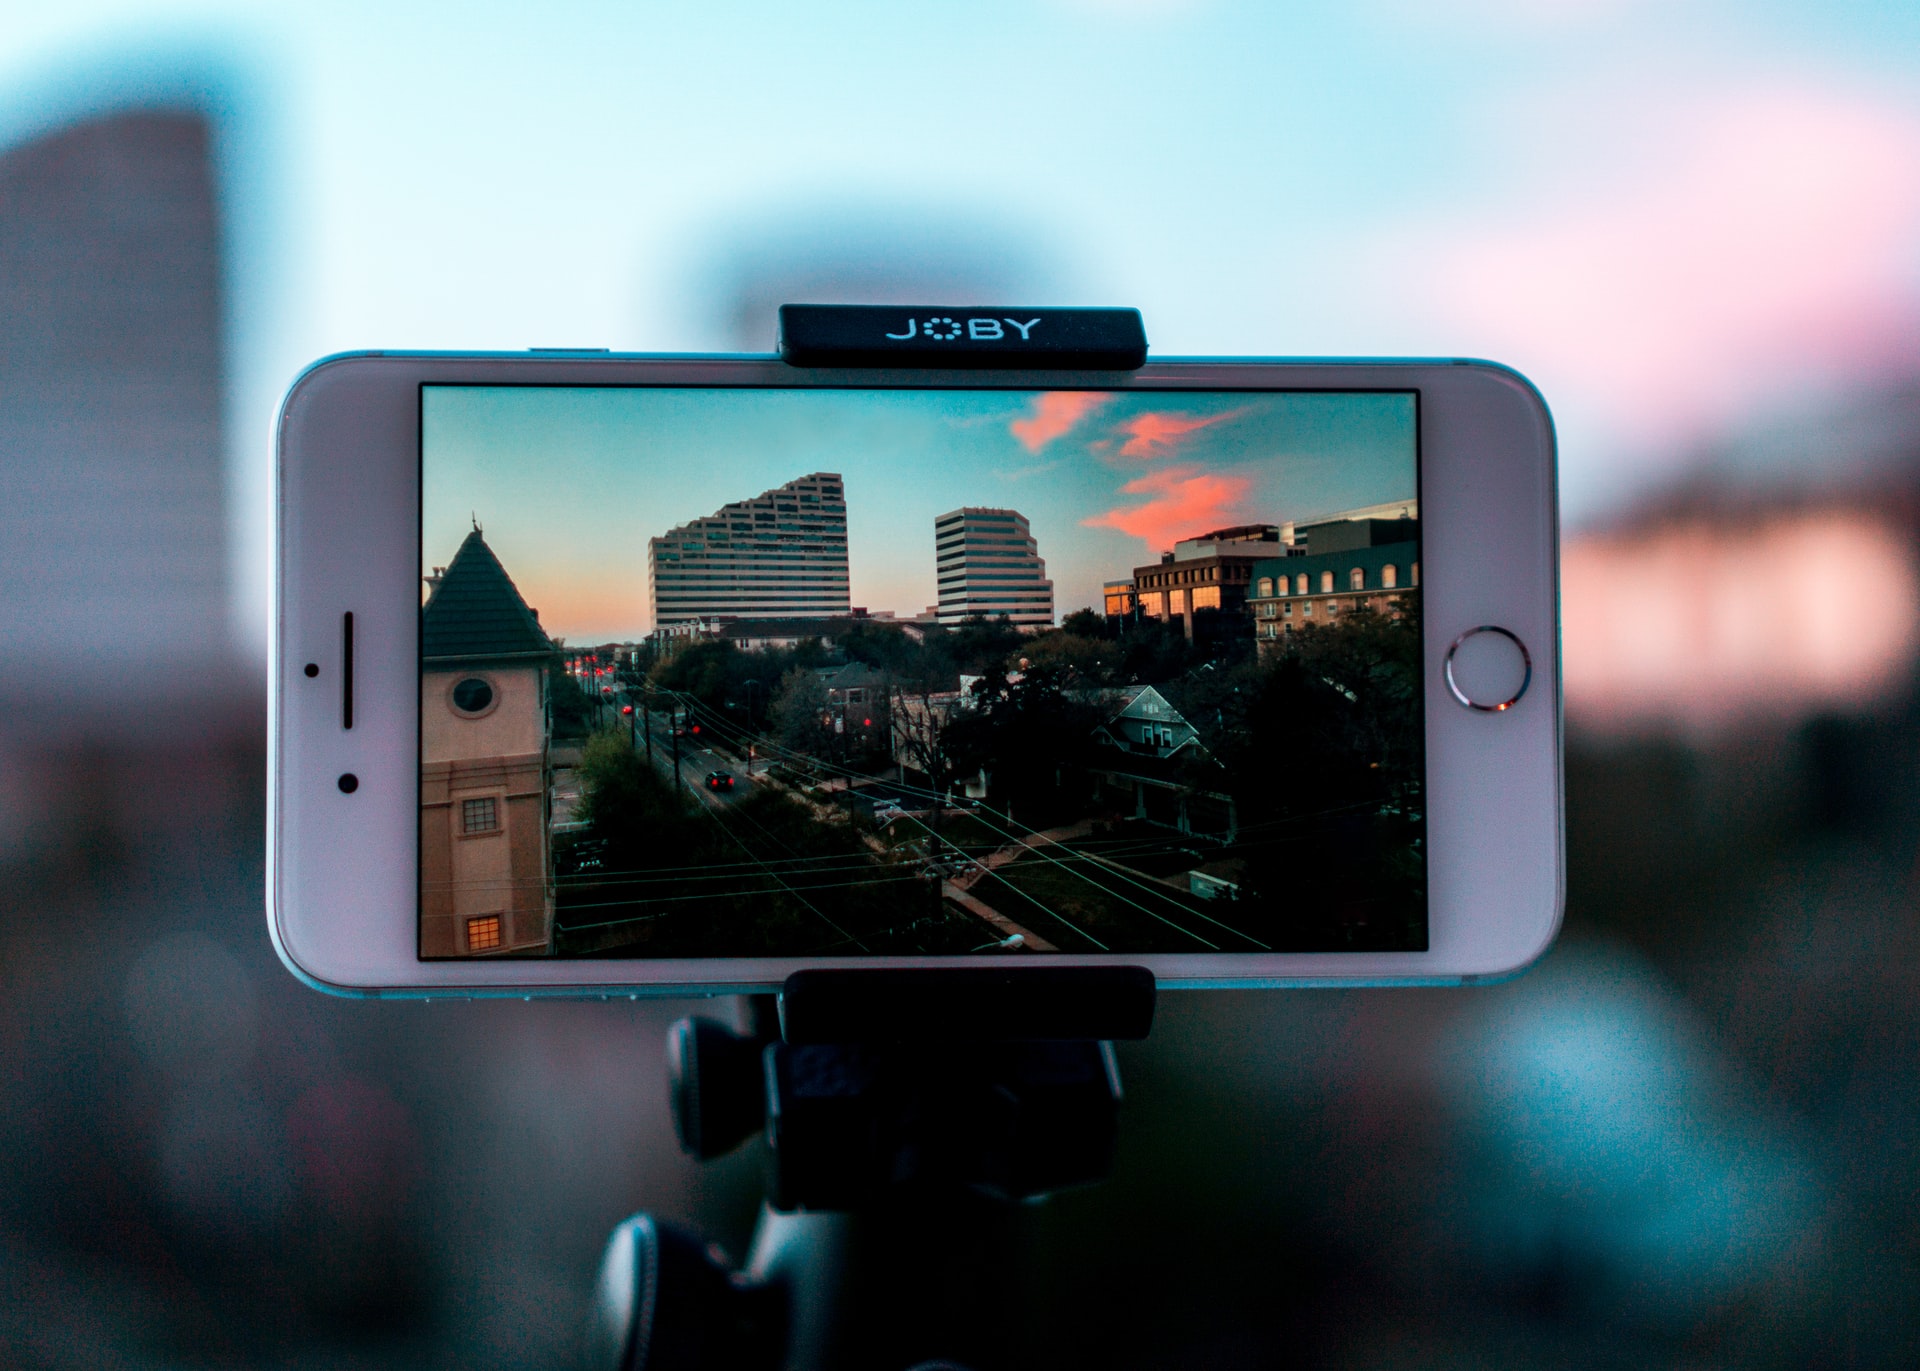 White iPhone capturing city landscape